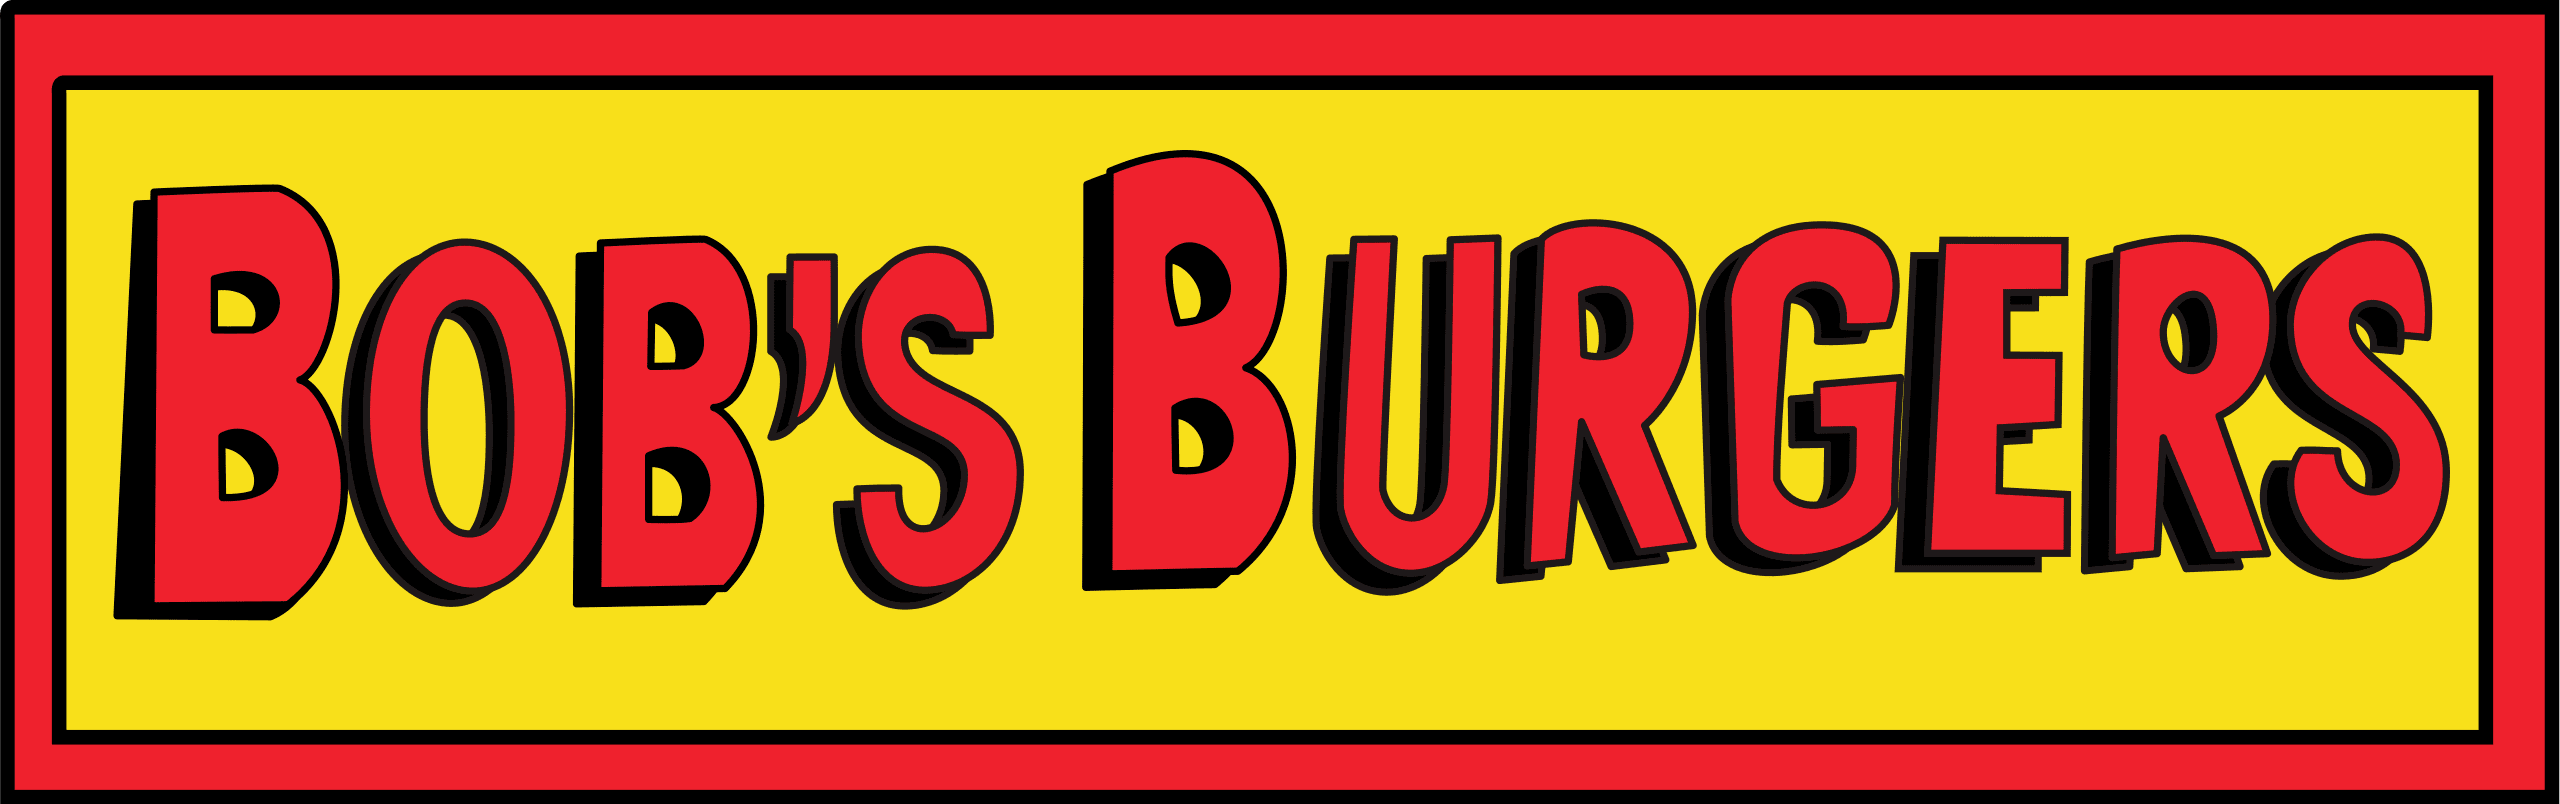 2560px-Bob%27s_Burgers_logo.svg.png